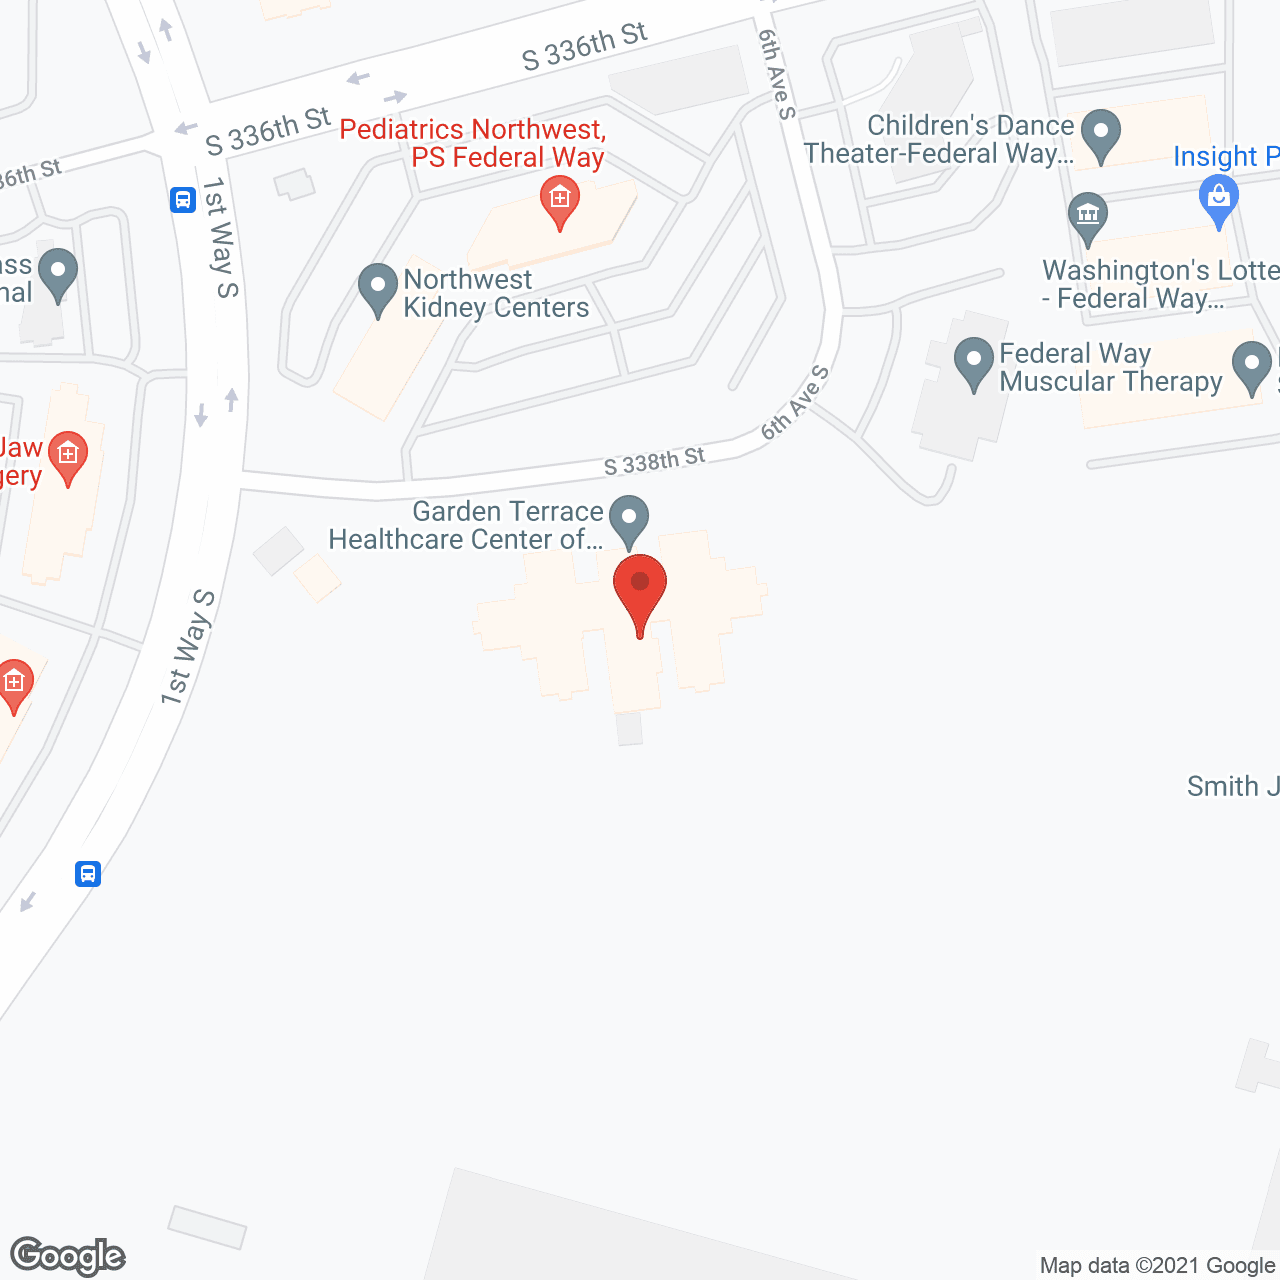 Garden Terrace Healthcare Center of Federal Way in google map